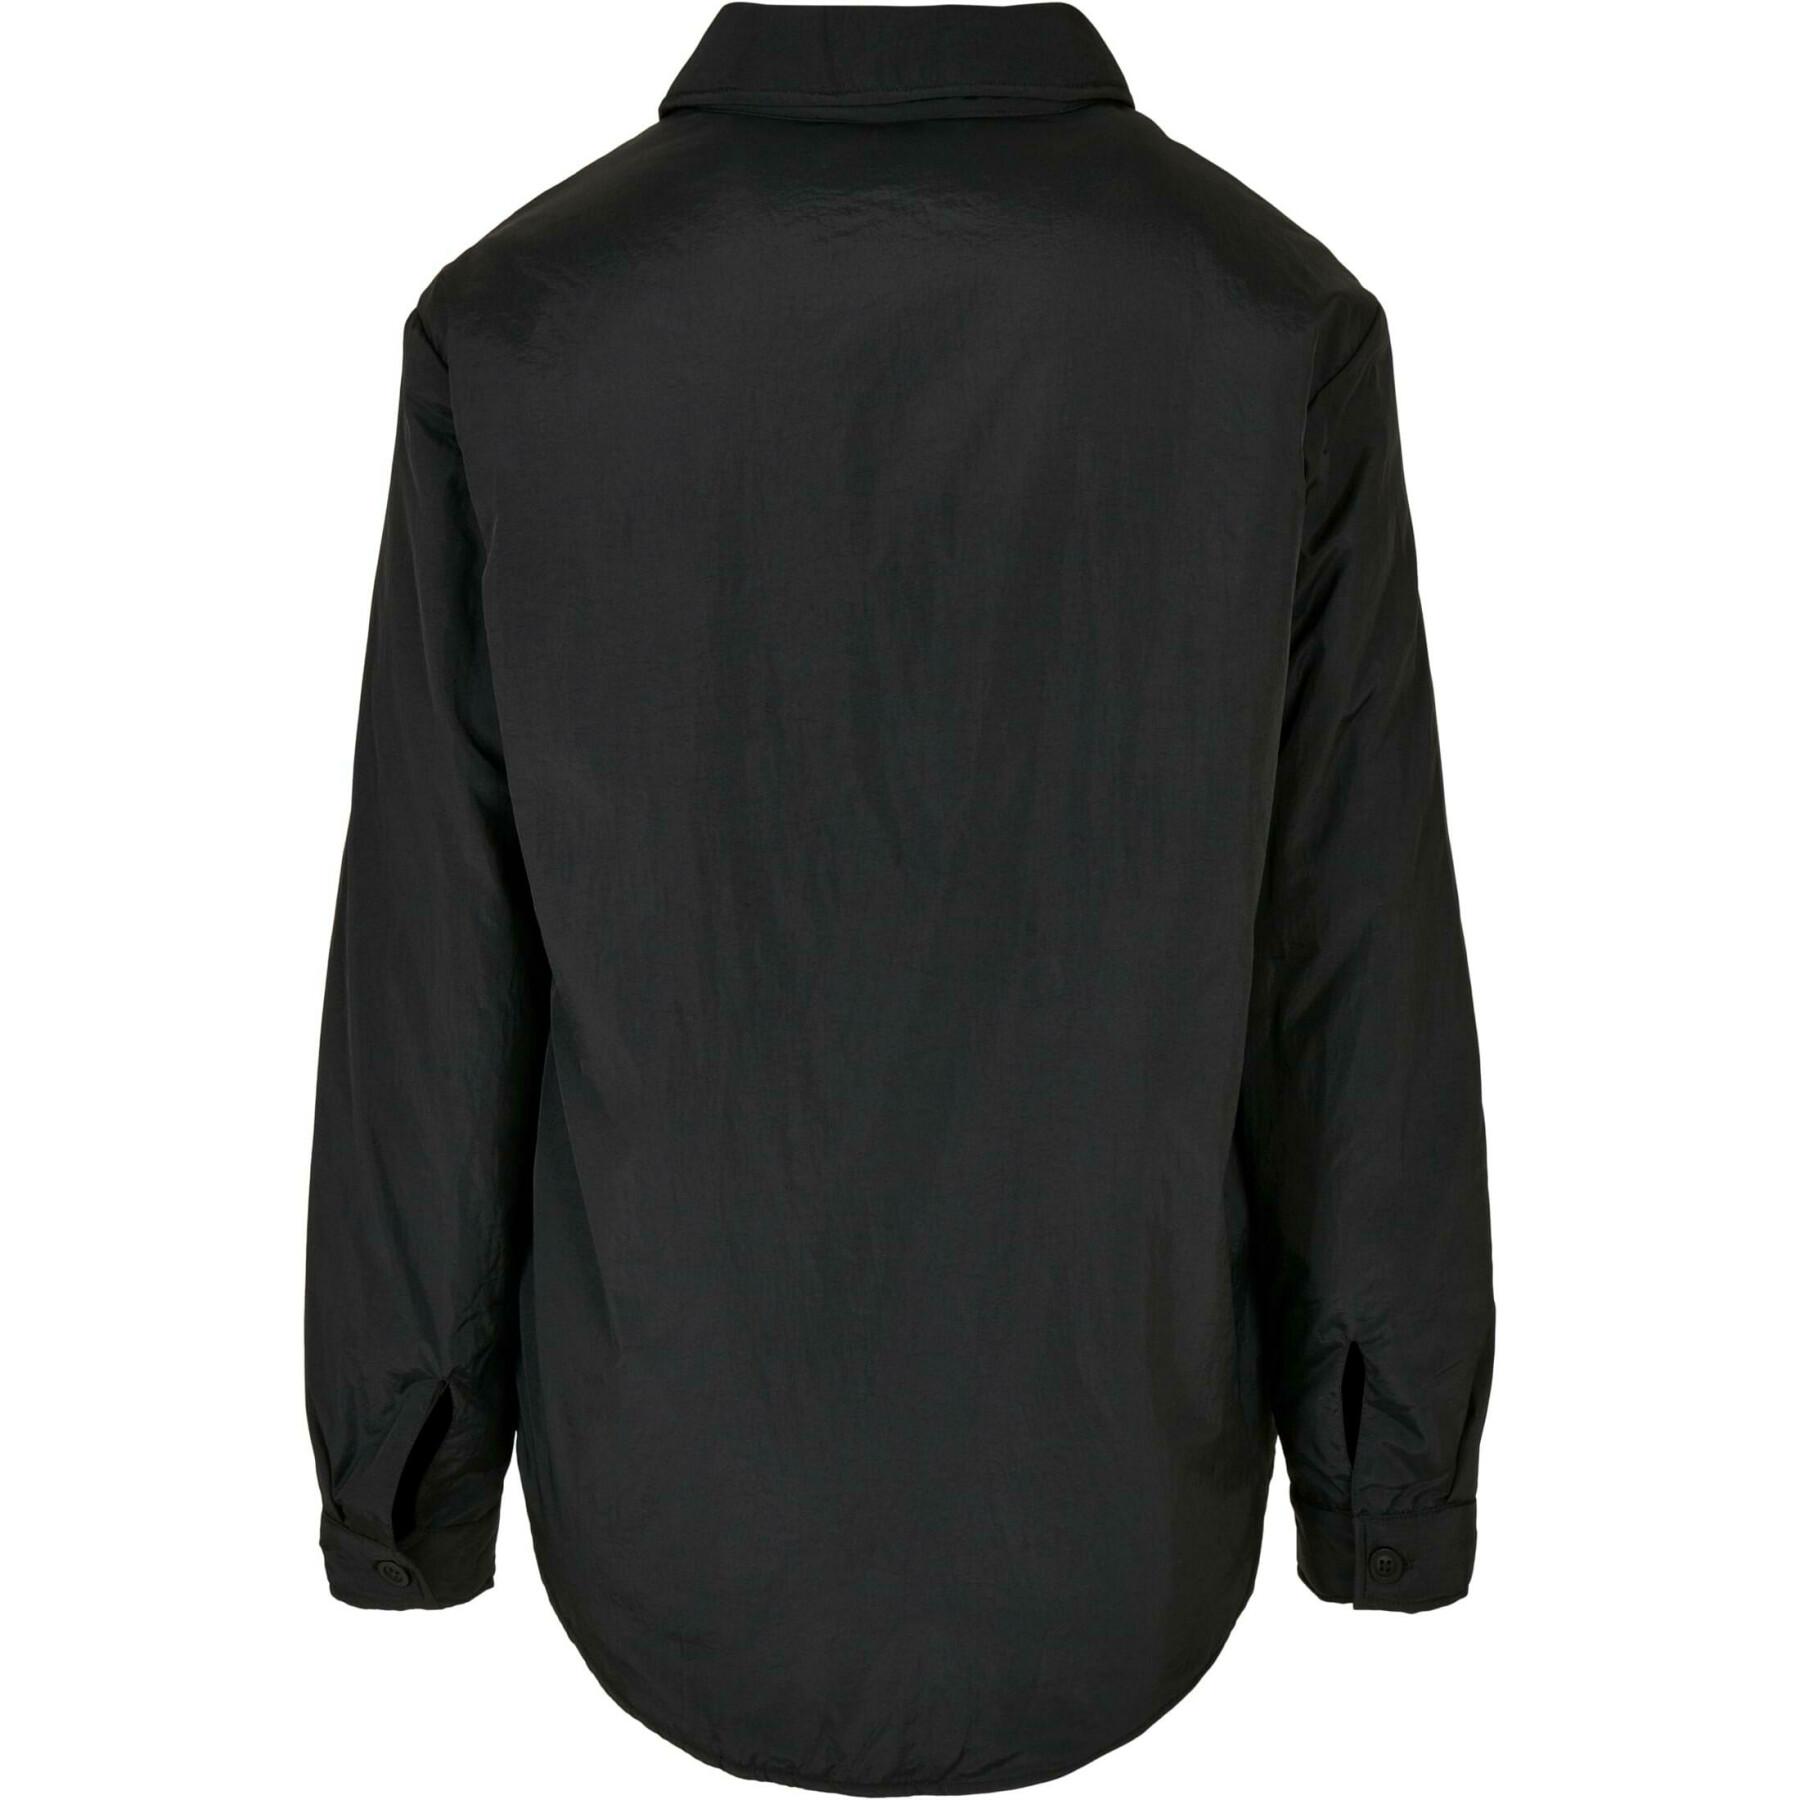 Padded nylon shirt jacket Urban Classics